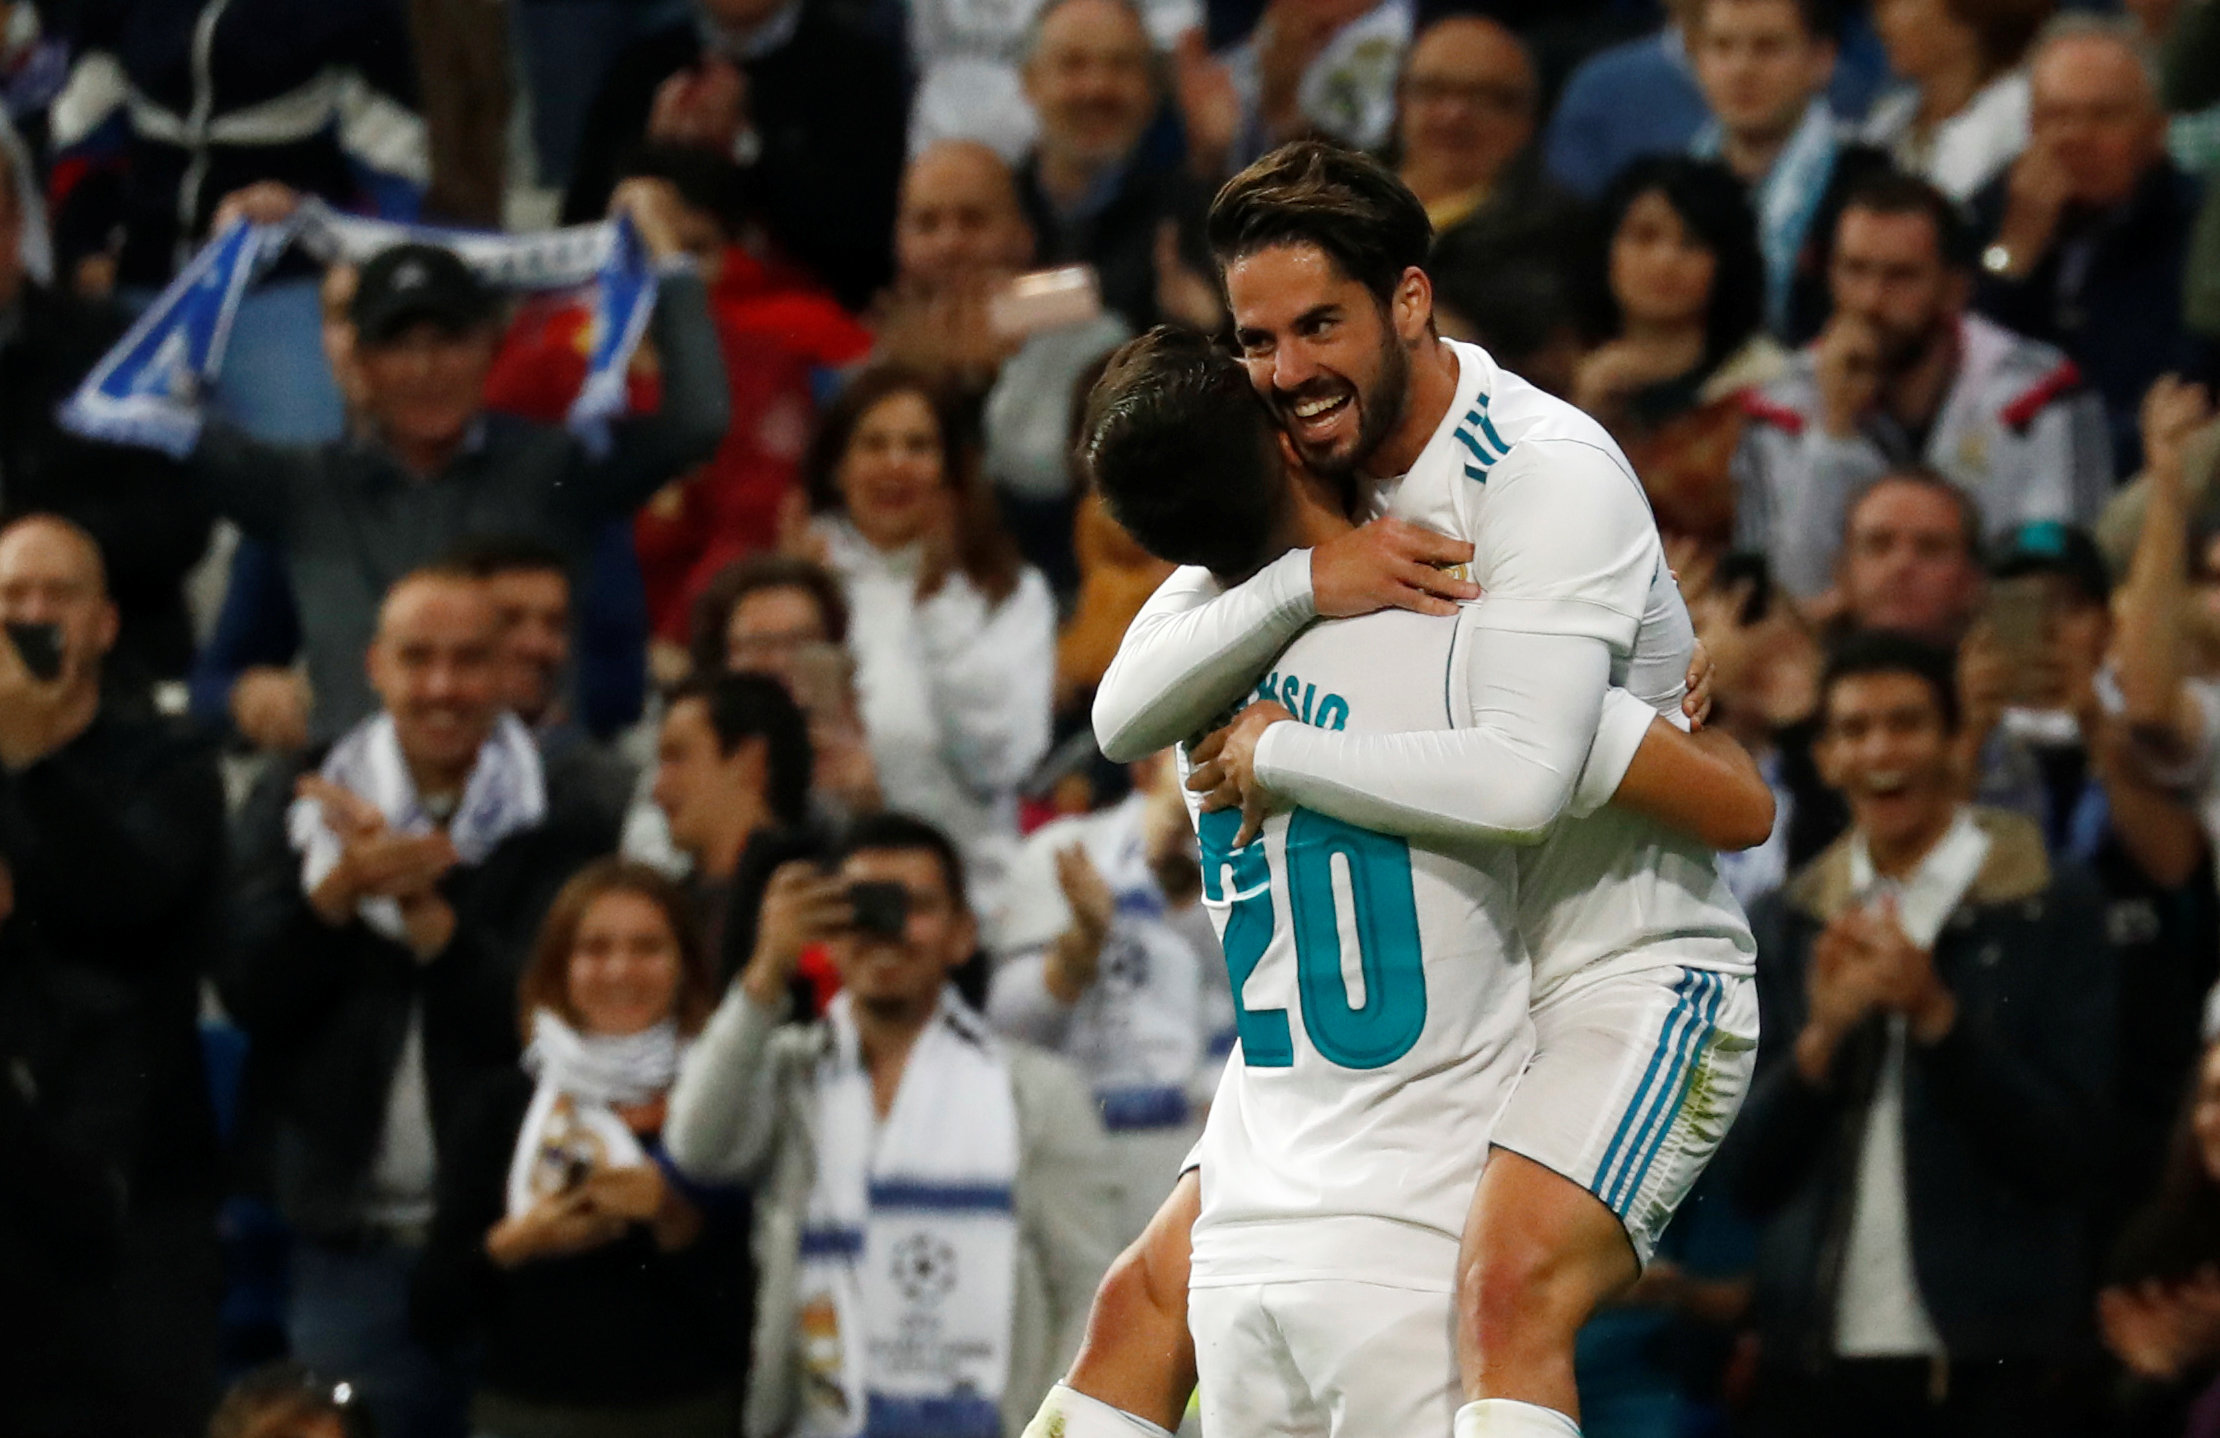 Football: Madrid's young guns shine as Benzema and Ronaldo struggle